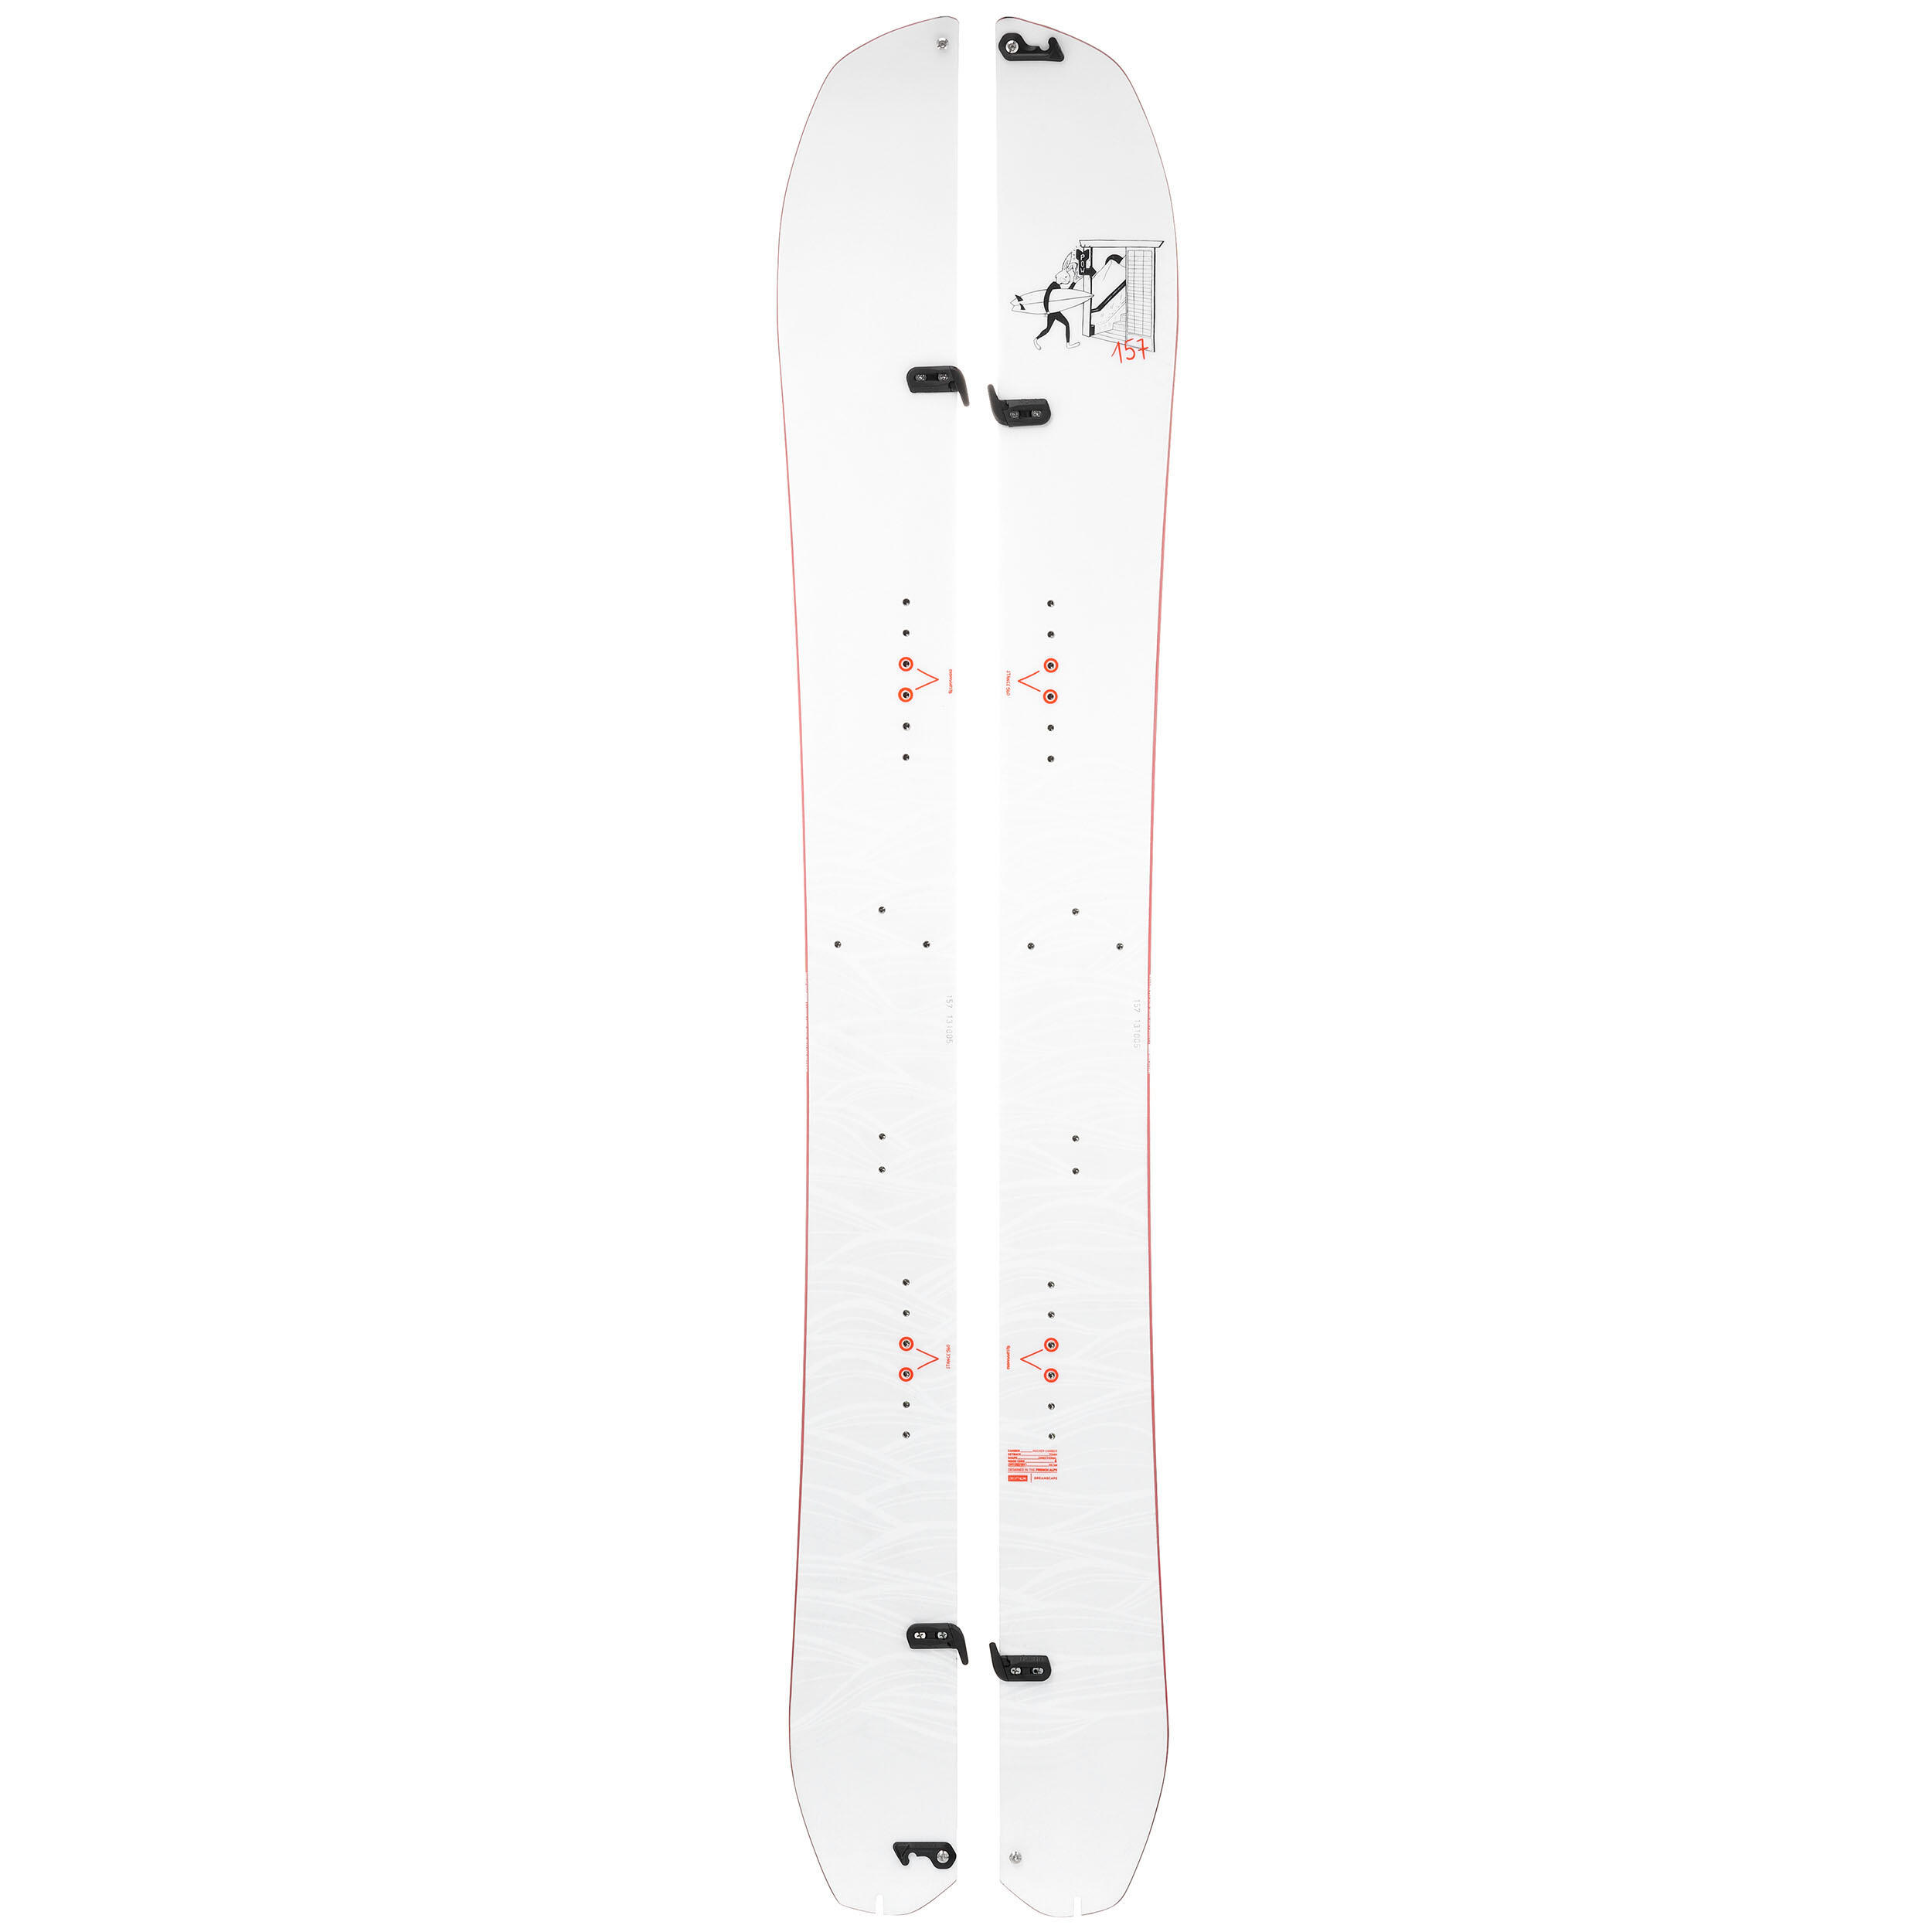 Snowboard Splitboard with Skins - 500 - DREAMSCAPE